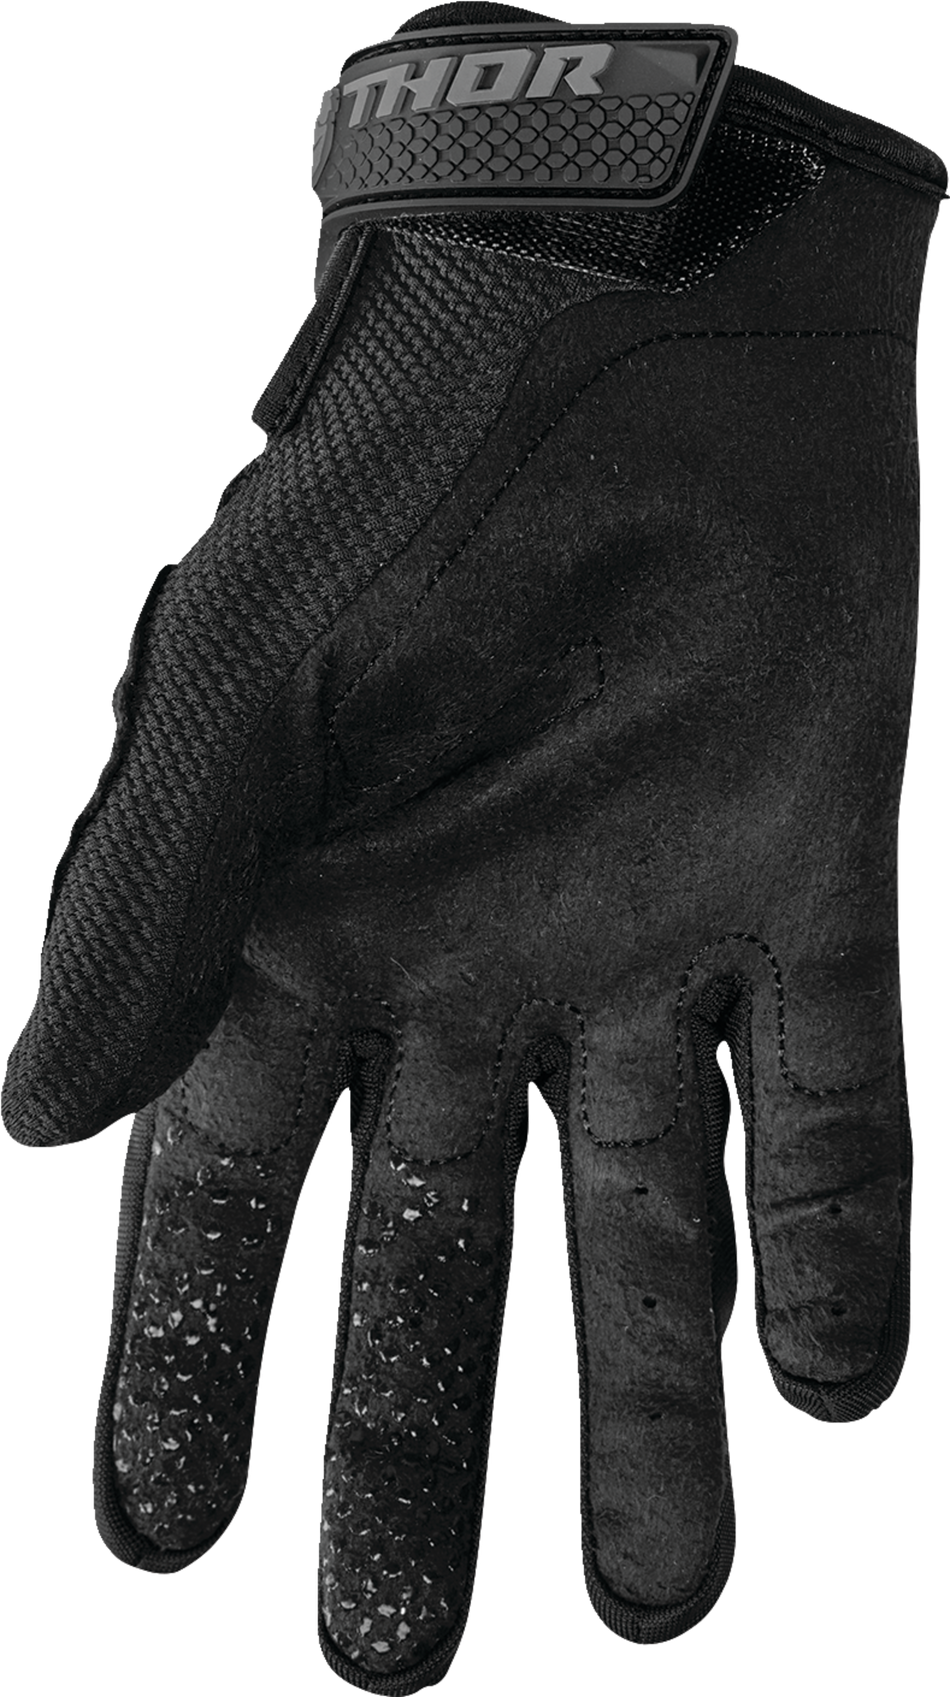 THOR Sector Gloves - Black/Gray - Medium 3330-7251